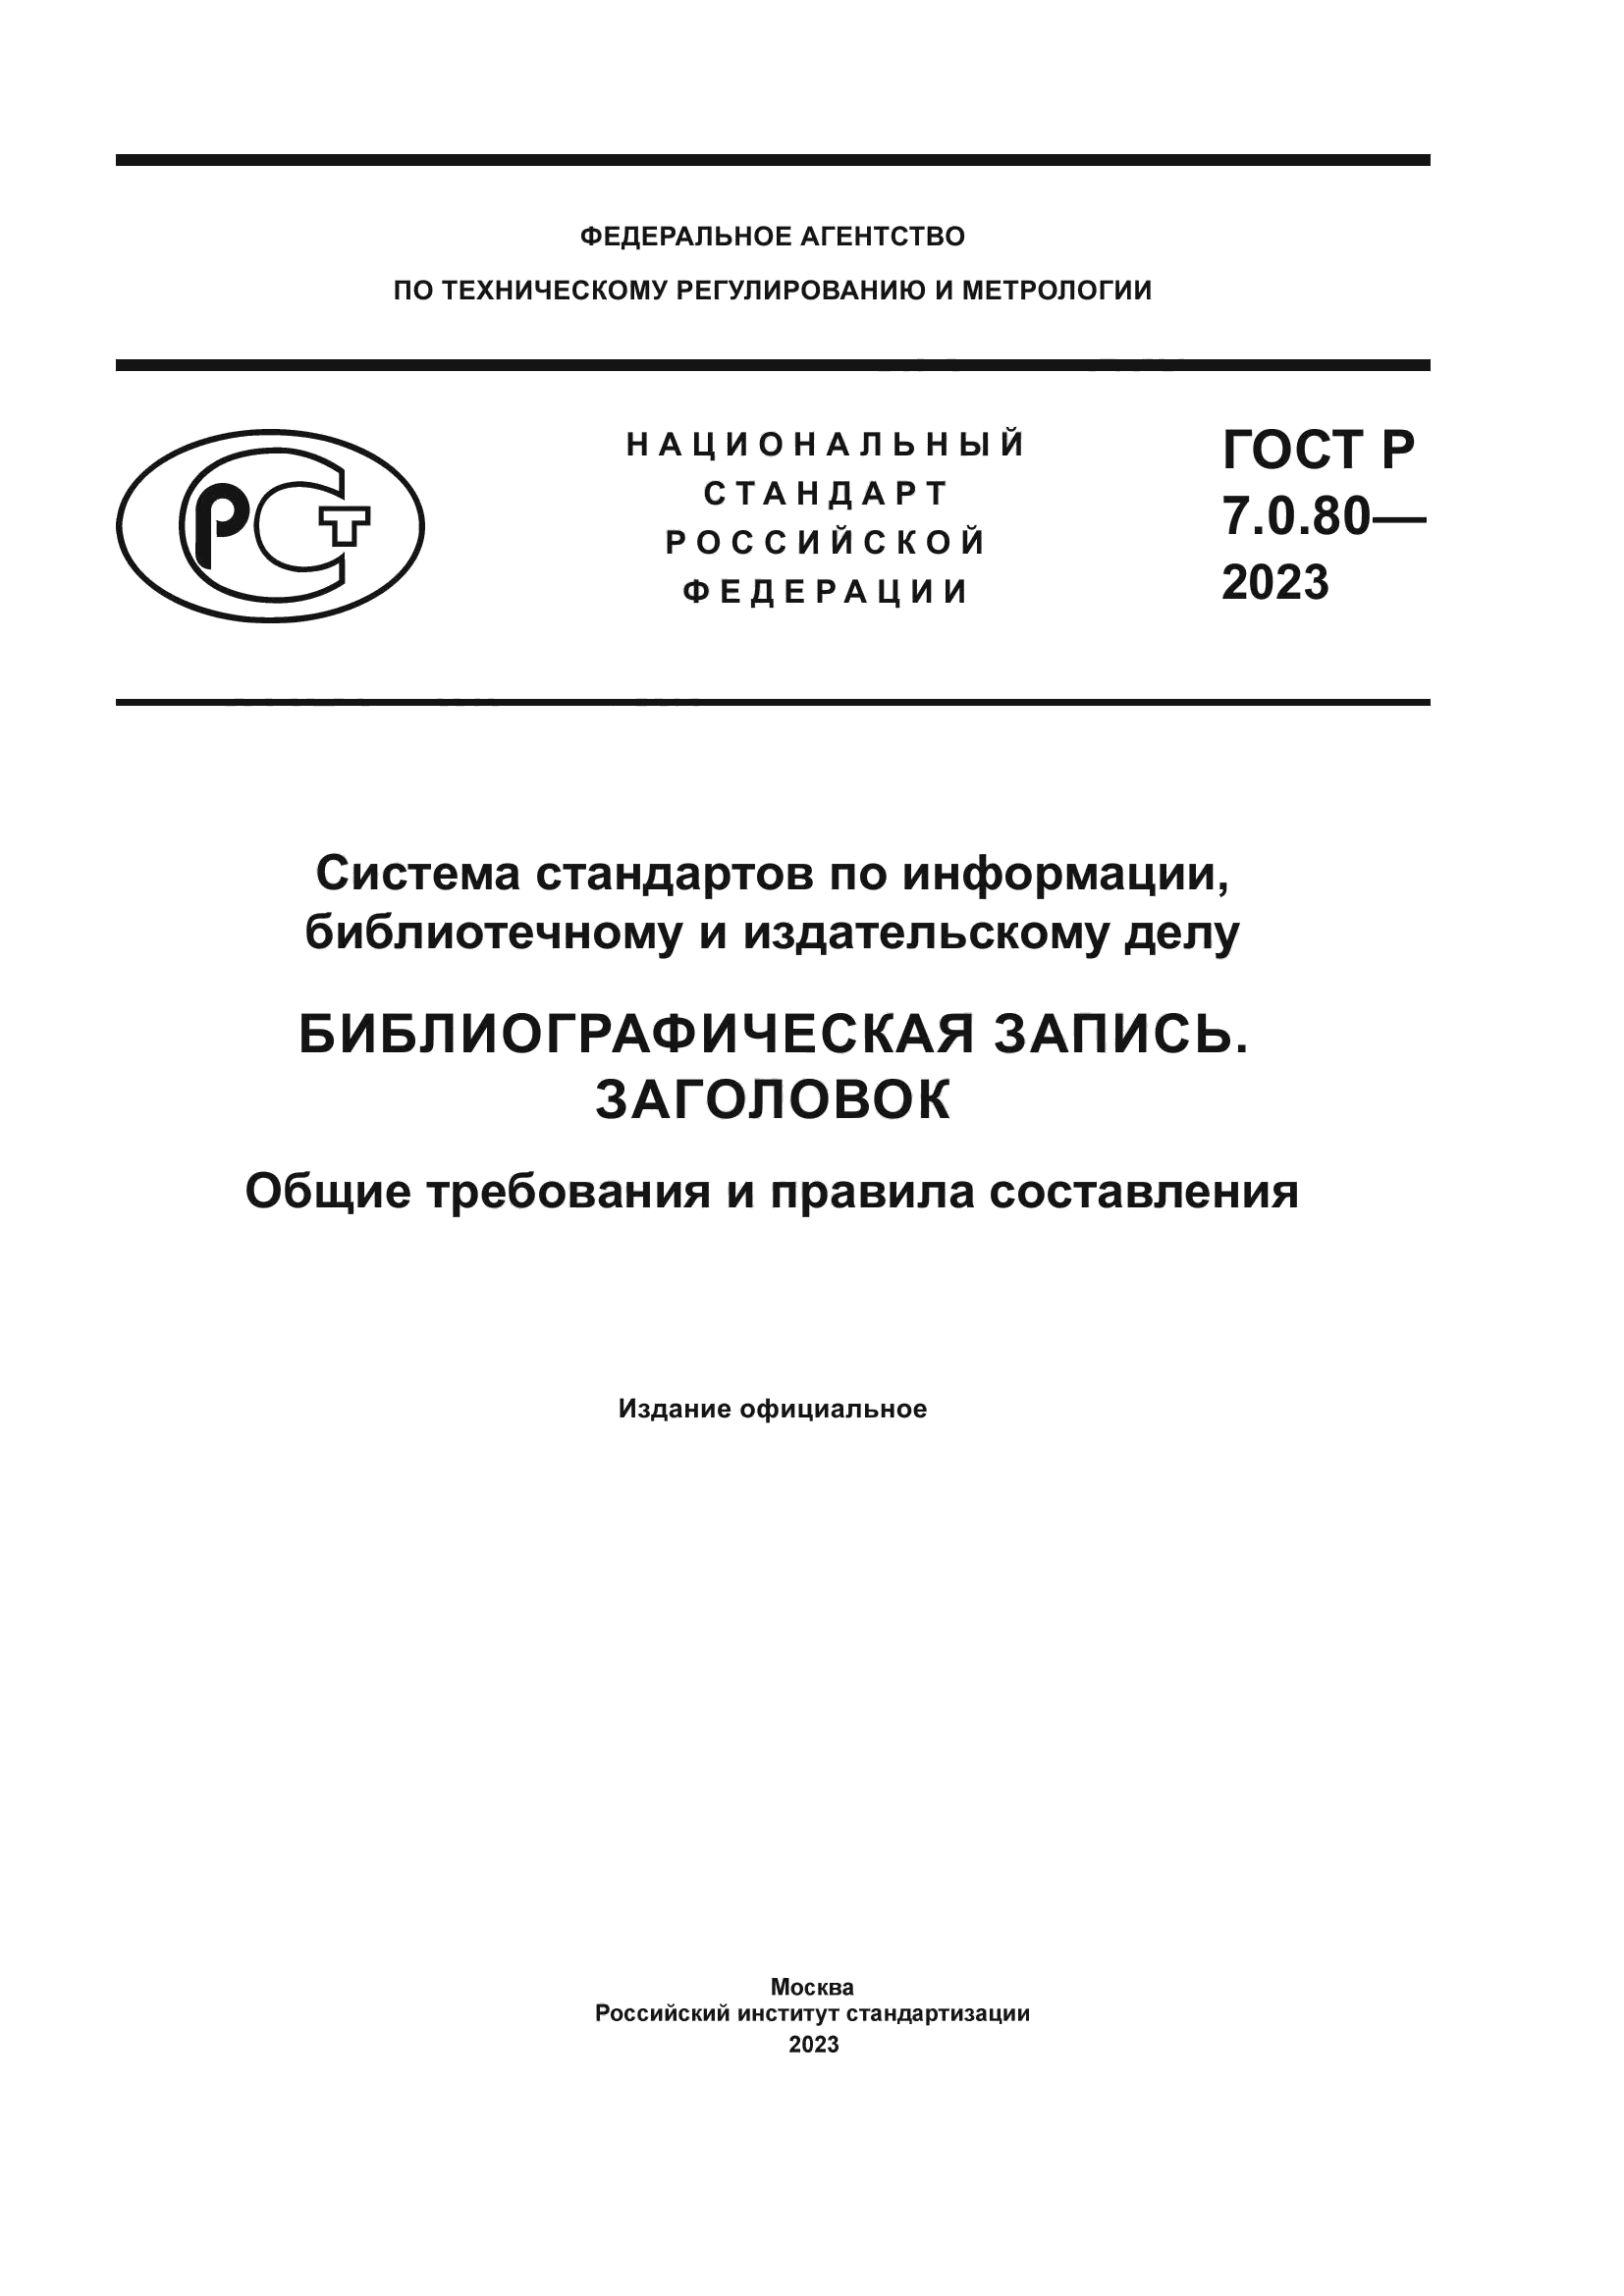 ГОСТ Р 7.0.80-2023